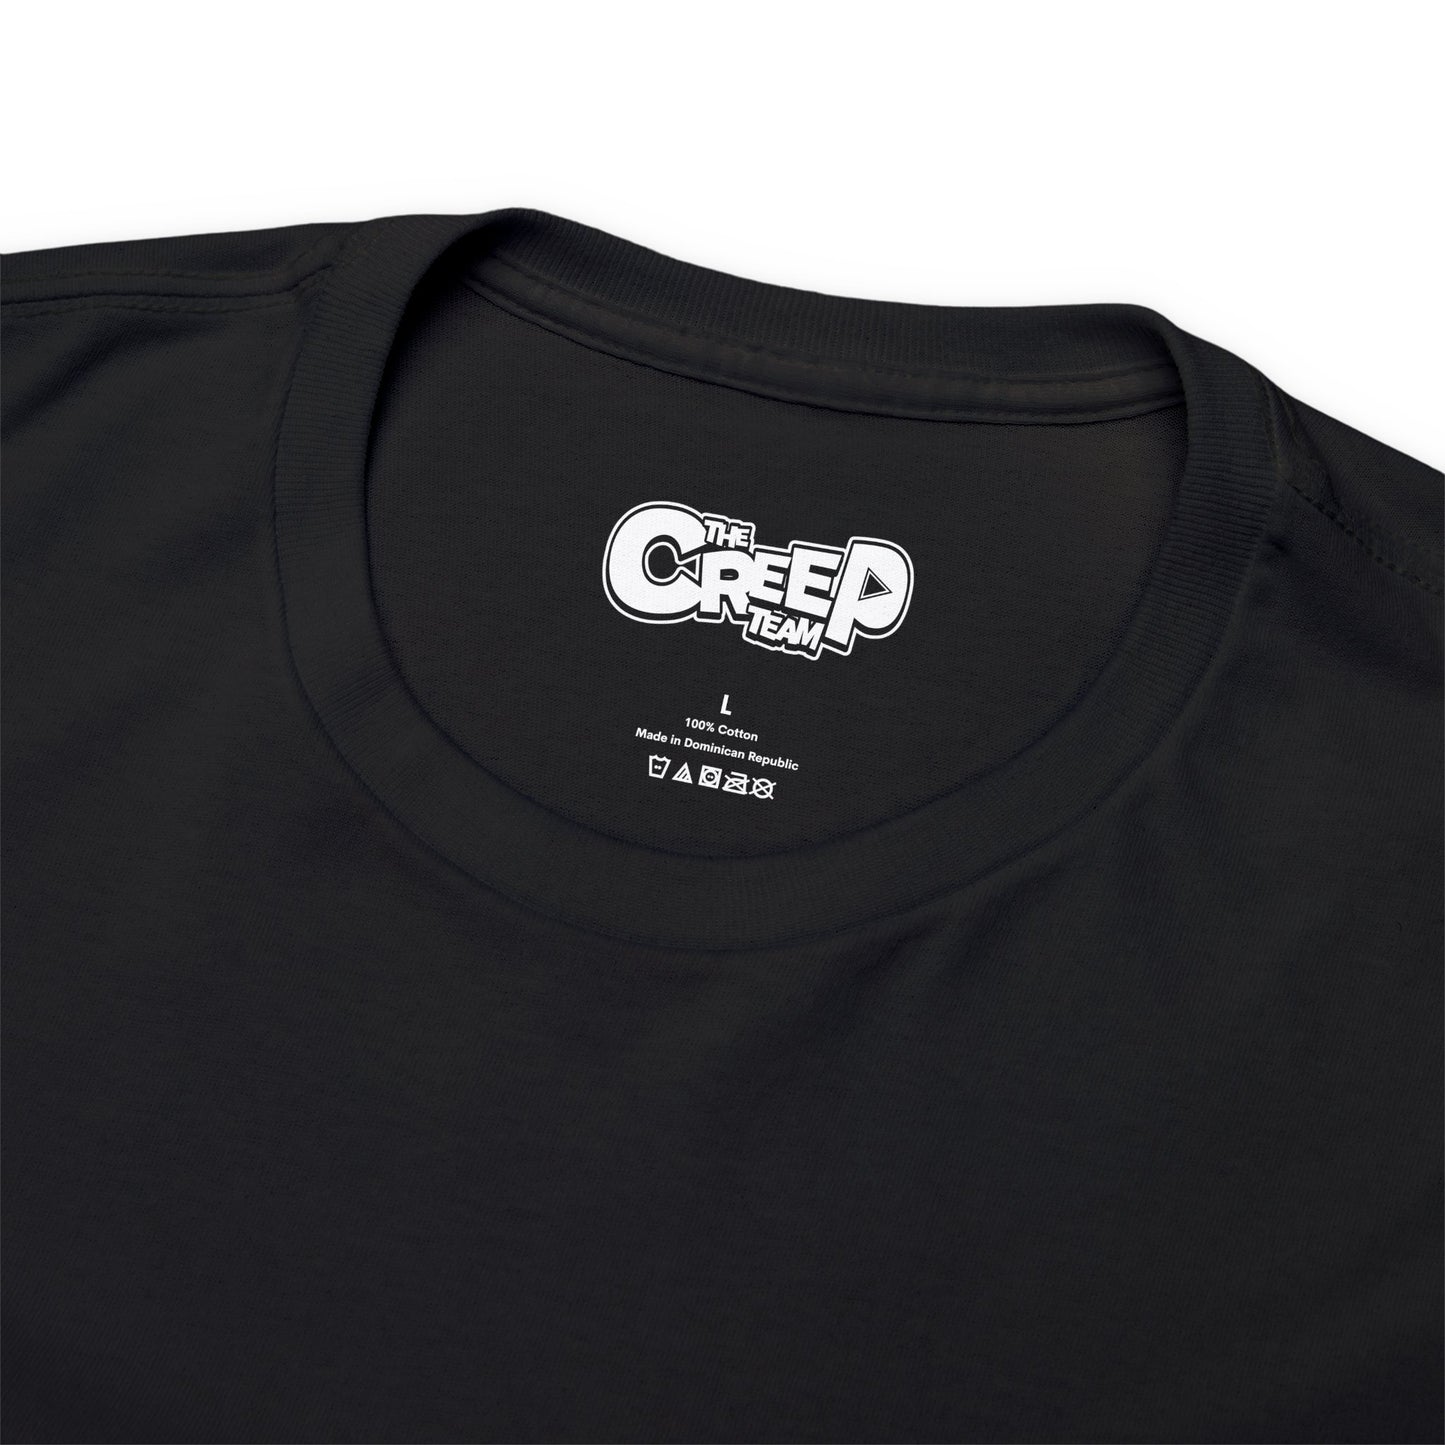 Creep Hub T-Shirt